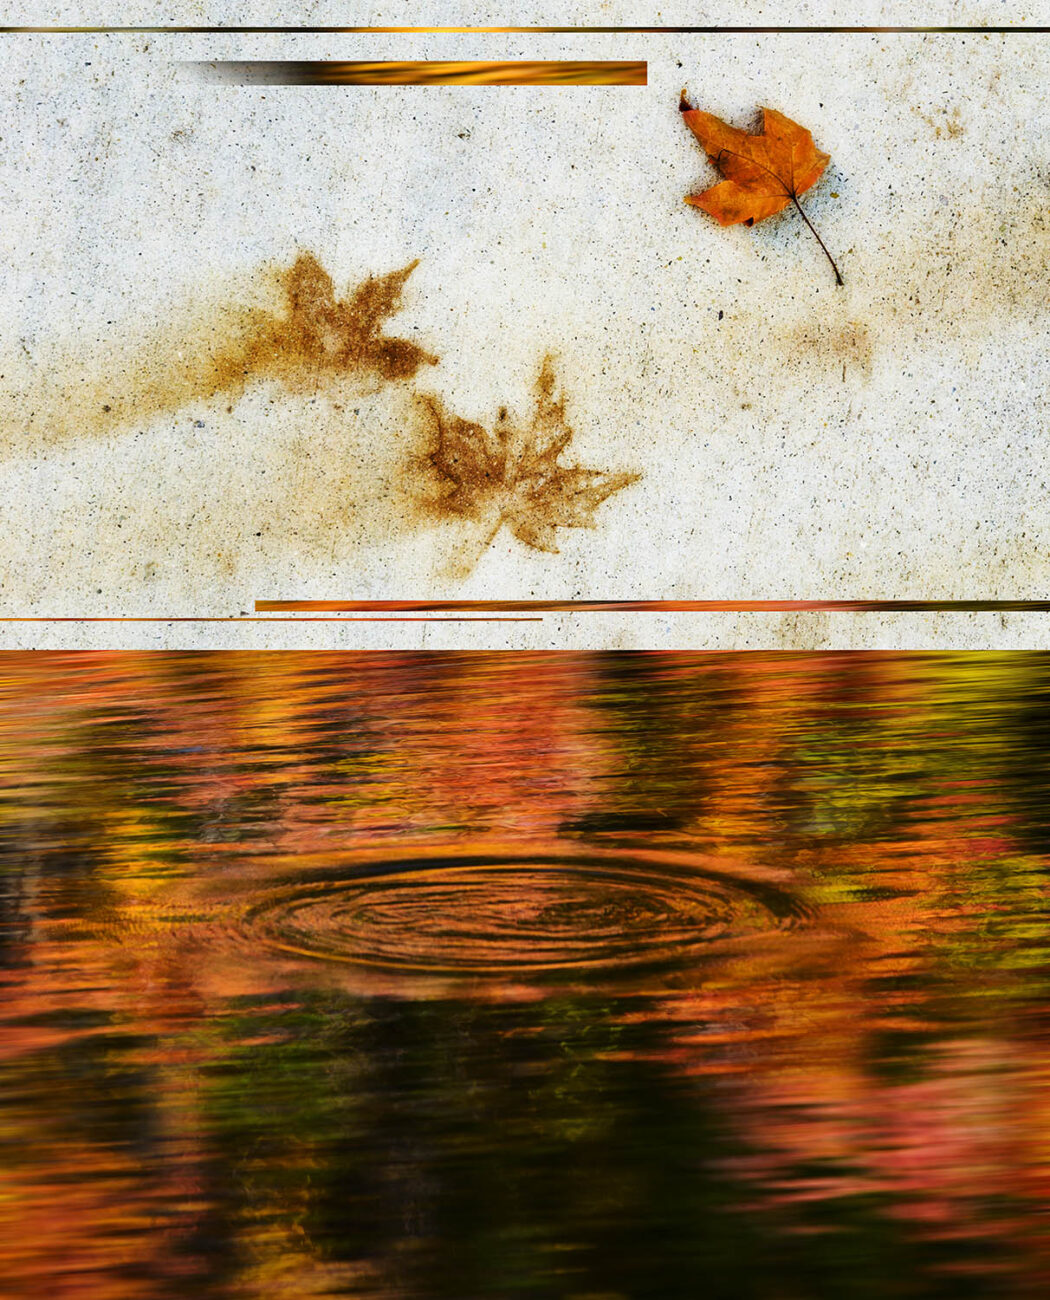 Autumn leaf patterns pavement, rising fish